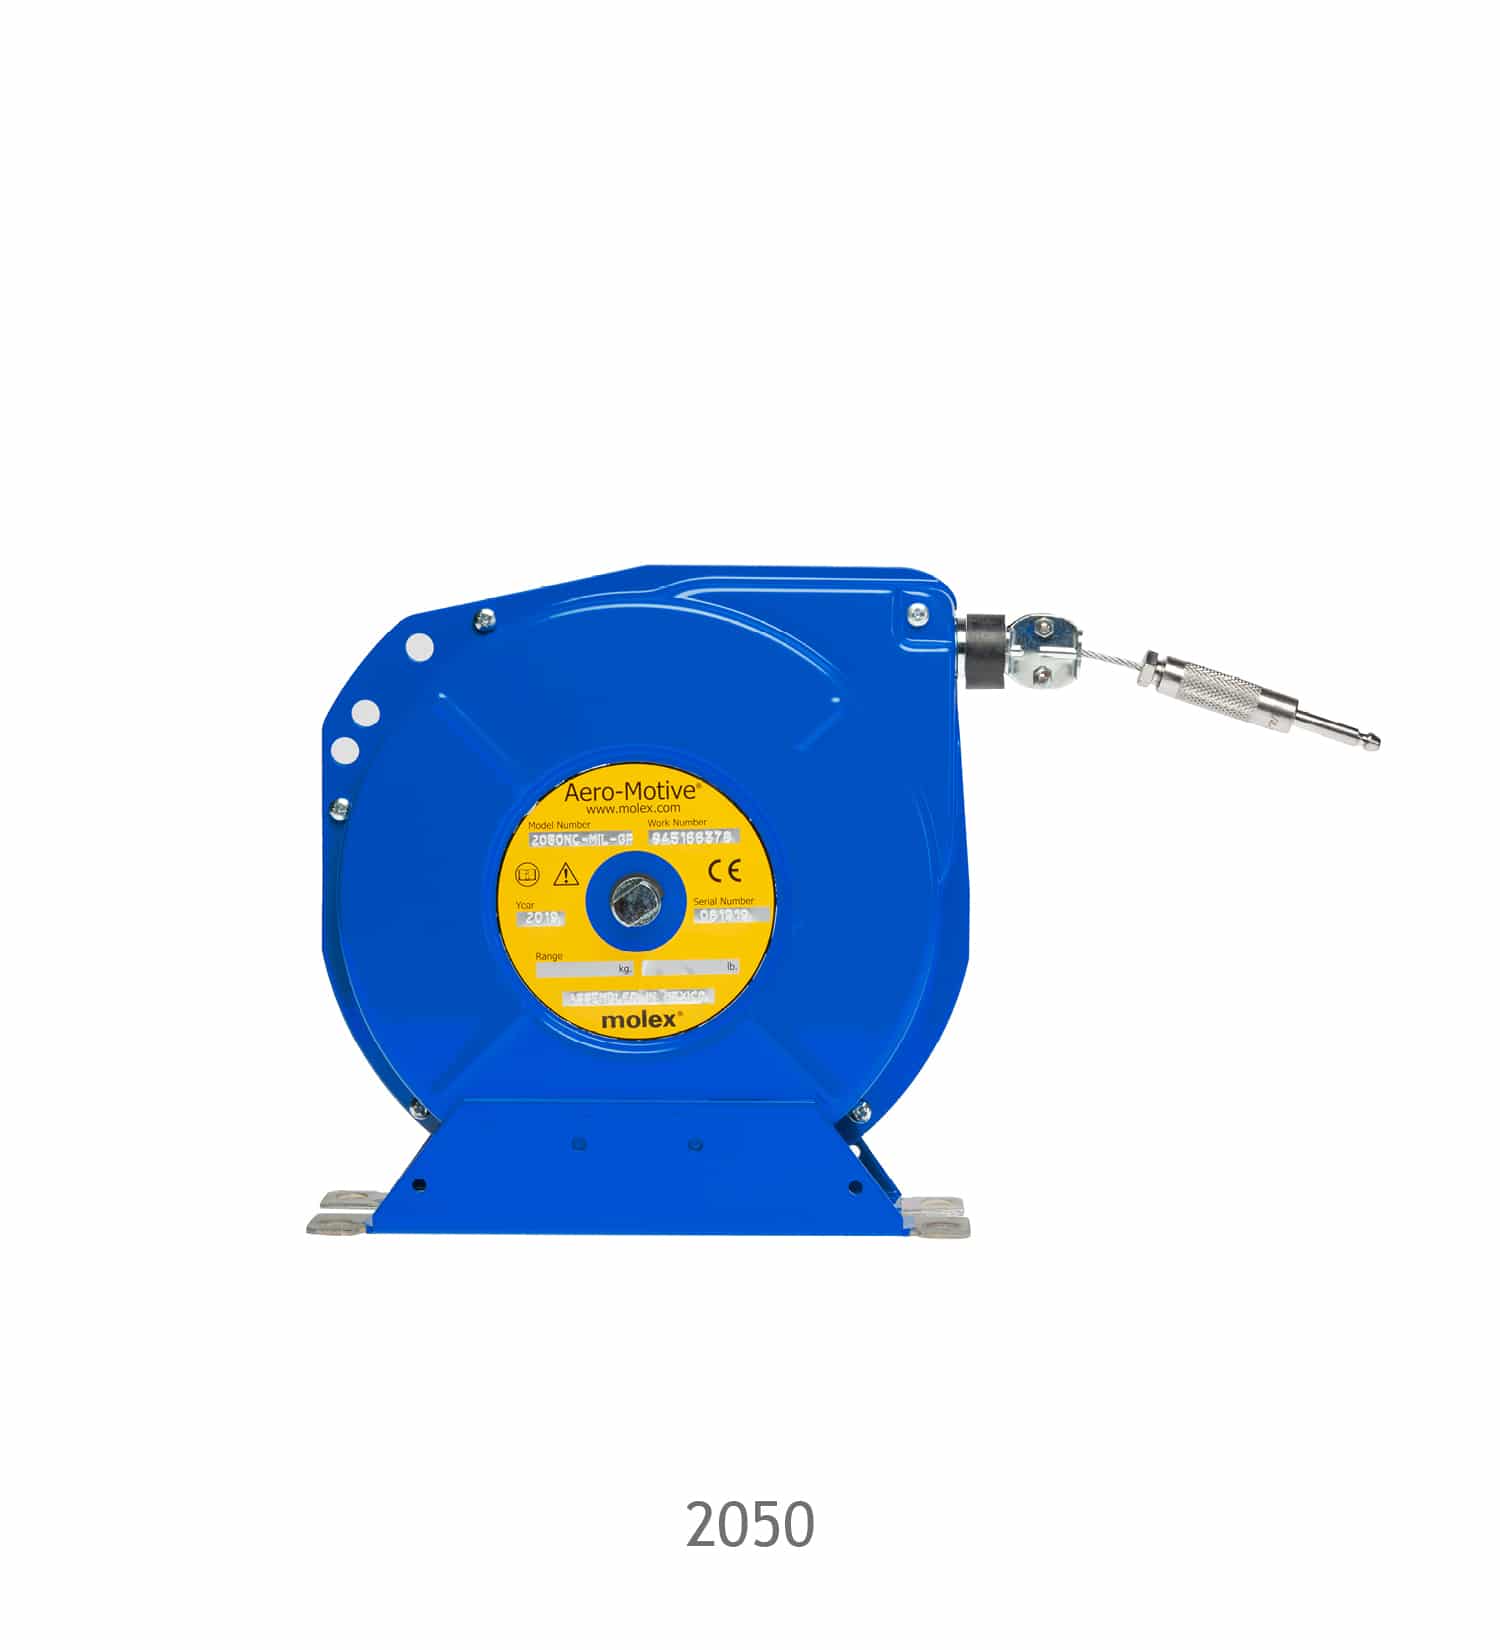 2050 by Aeromotive